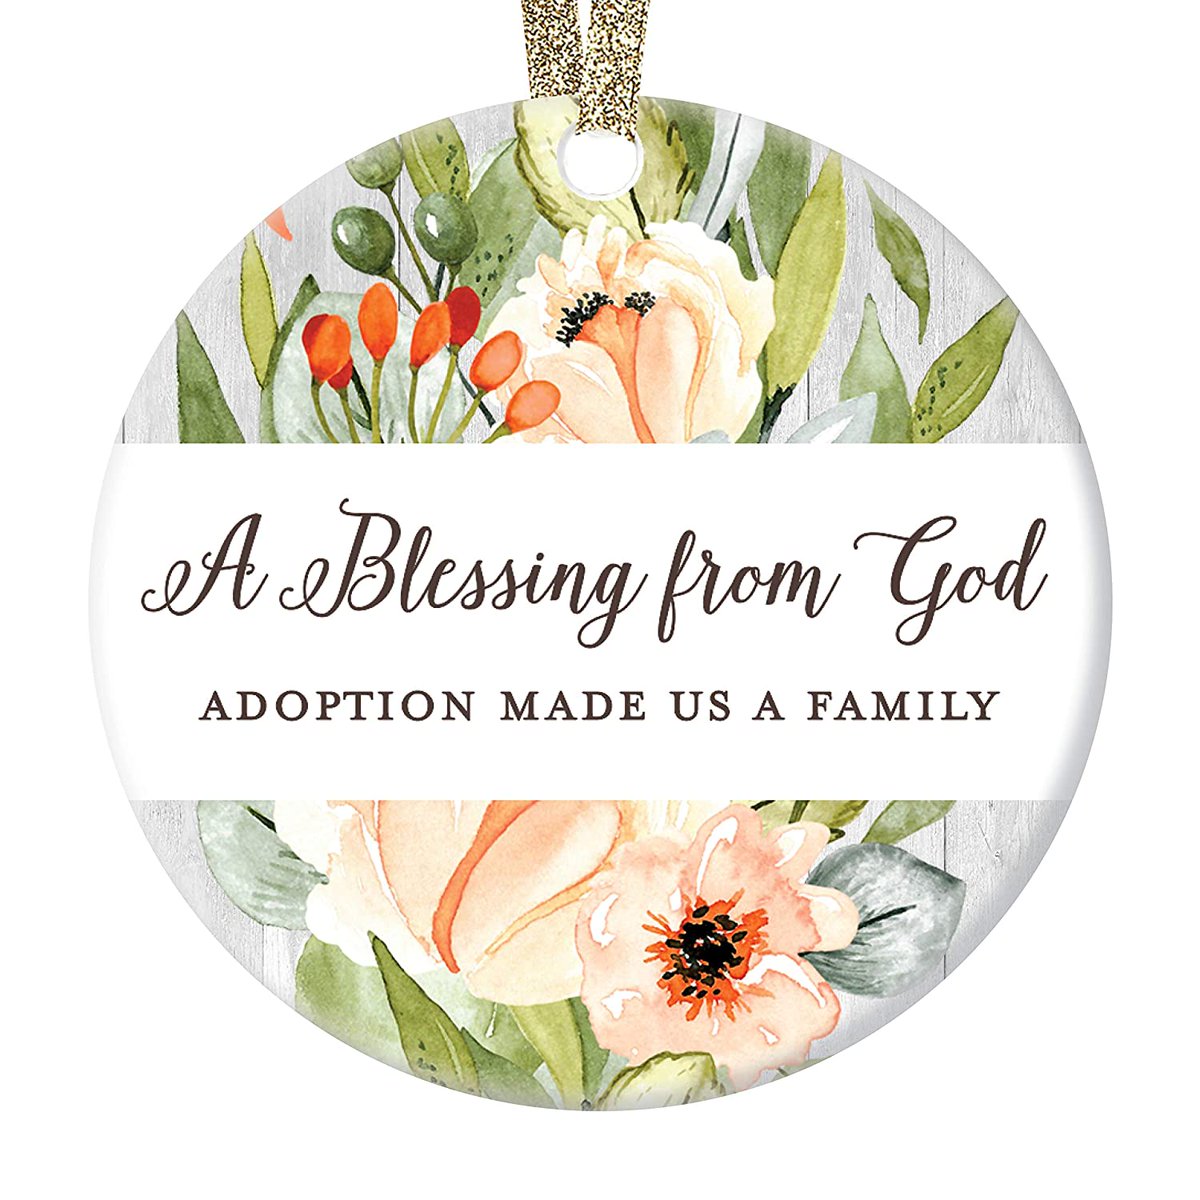 Amen! Adoption Services Worldwide (888)353-9941 or Info@babyasw.com